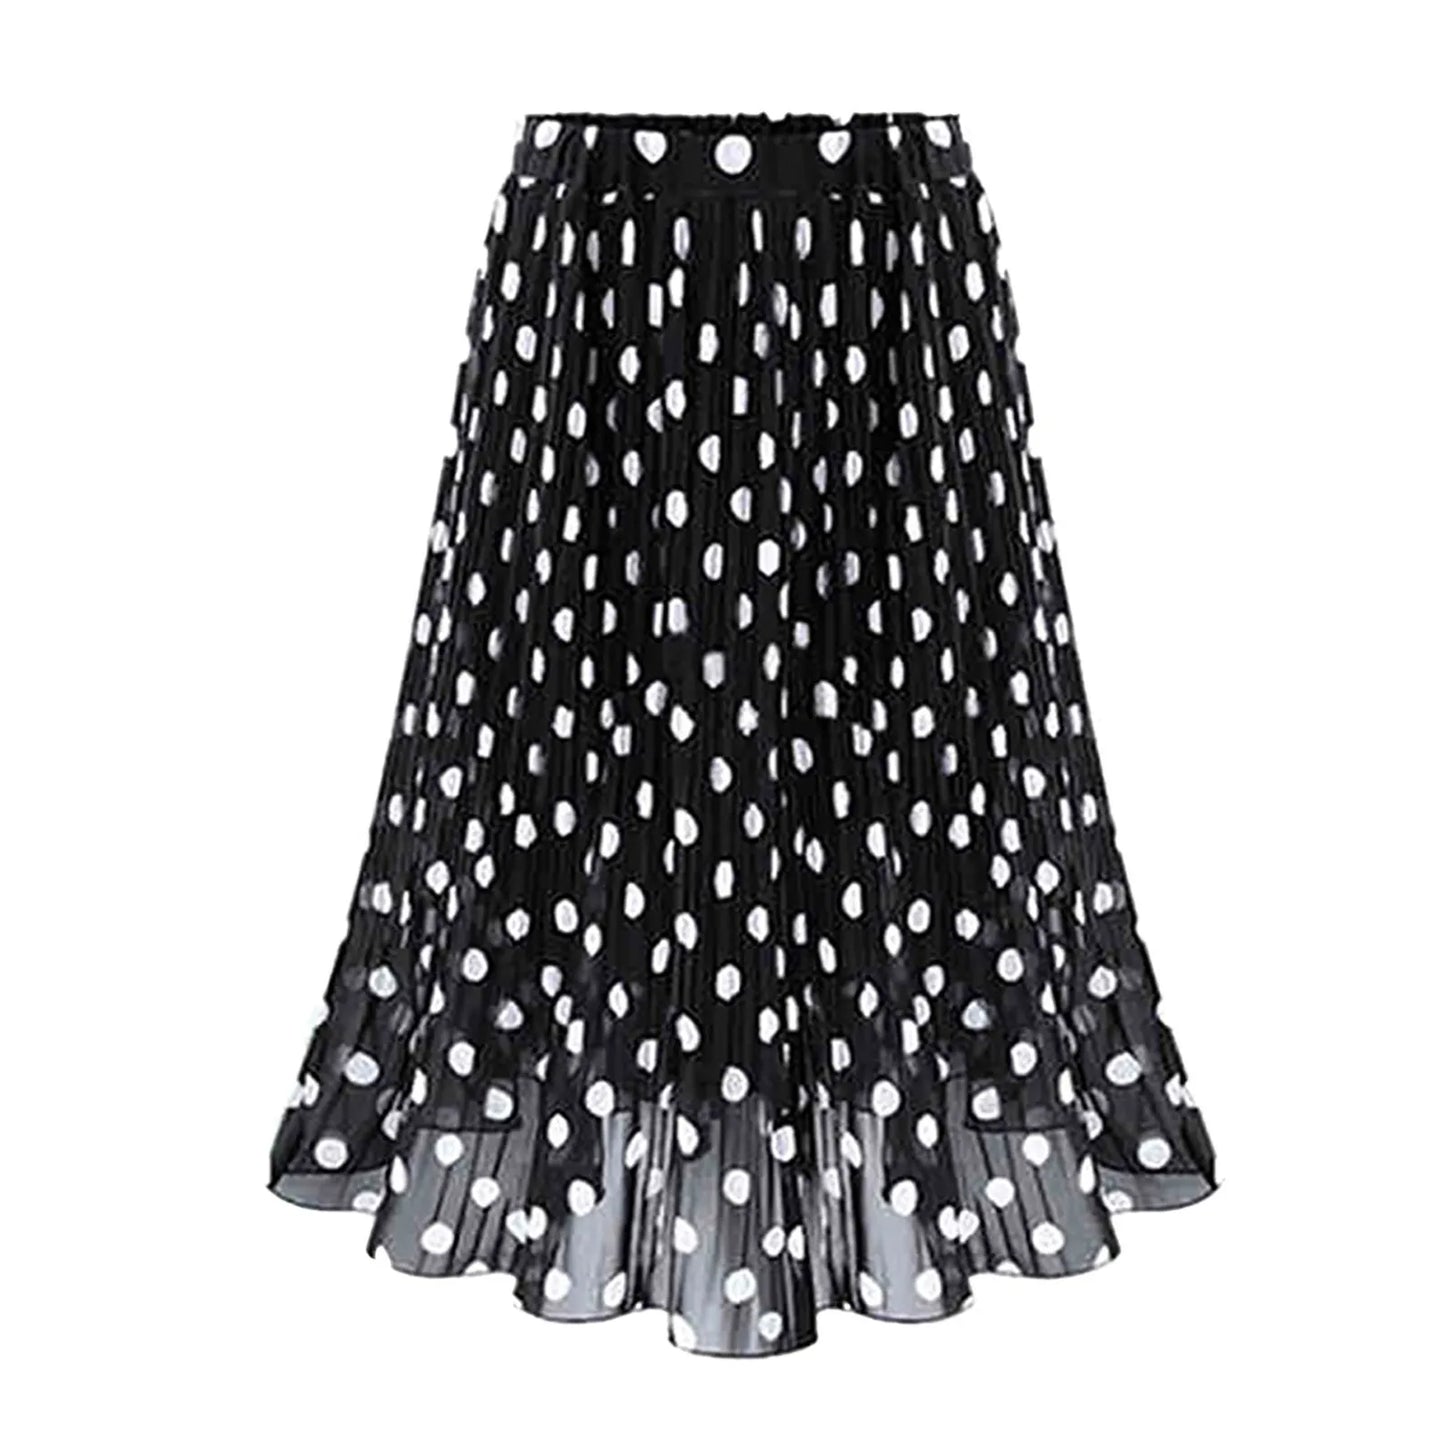 JuliaFashion - Pleated Chiffon Tulle Polka Dot Vintage Flared Skirt Dress